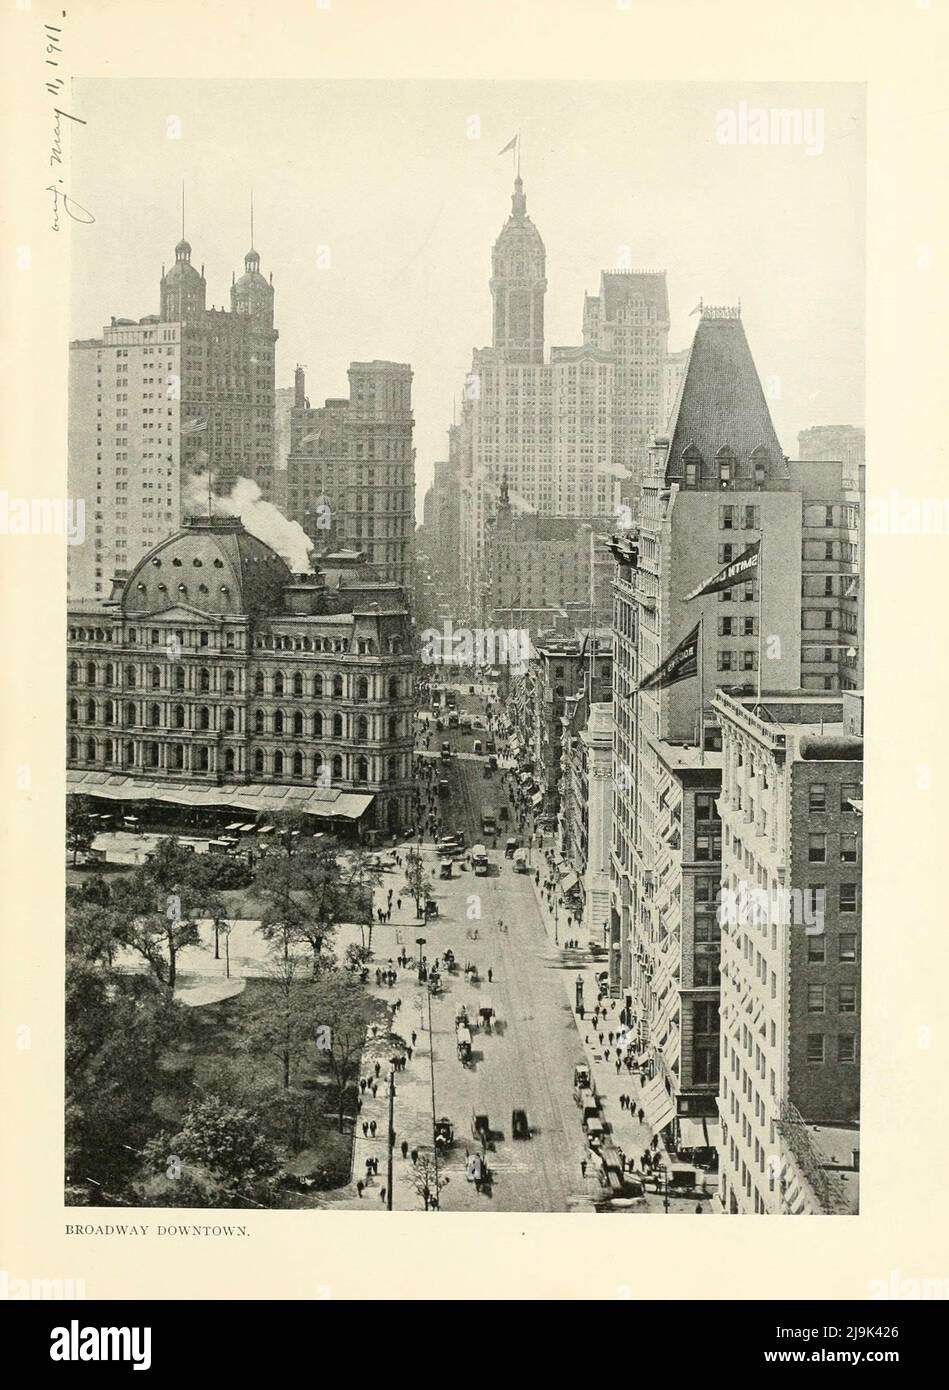 Broadway Downtown 1911 aus dem Buch ' New York Illustrated ' Erscheinungsdatum 1911 Verlag New York : Success Postal Card Co. Stockfoto